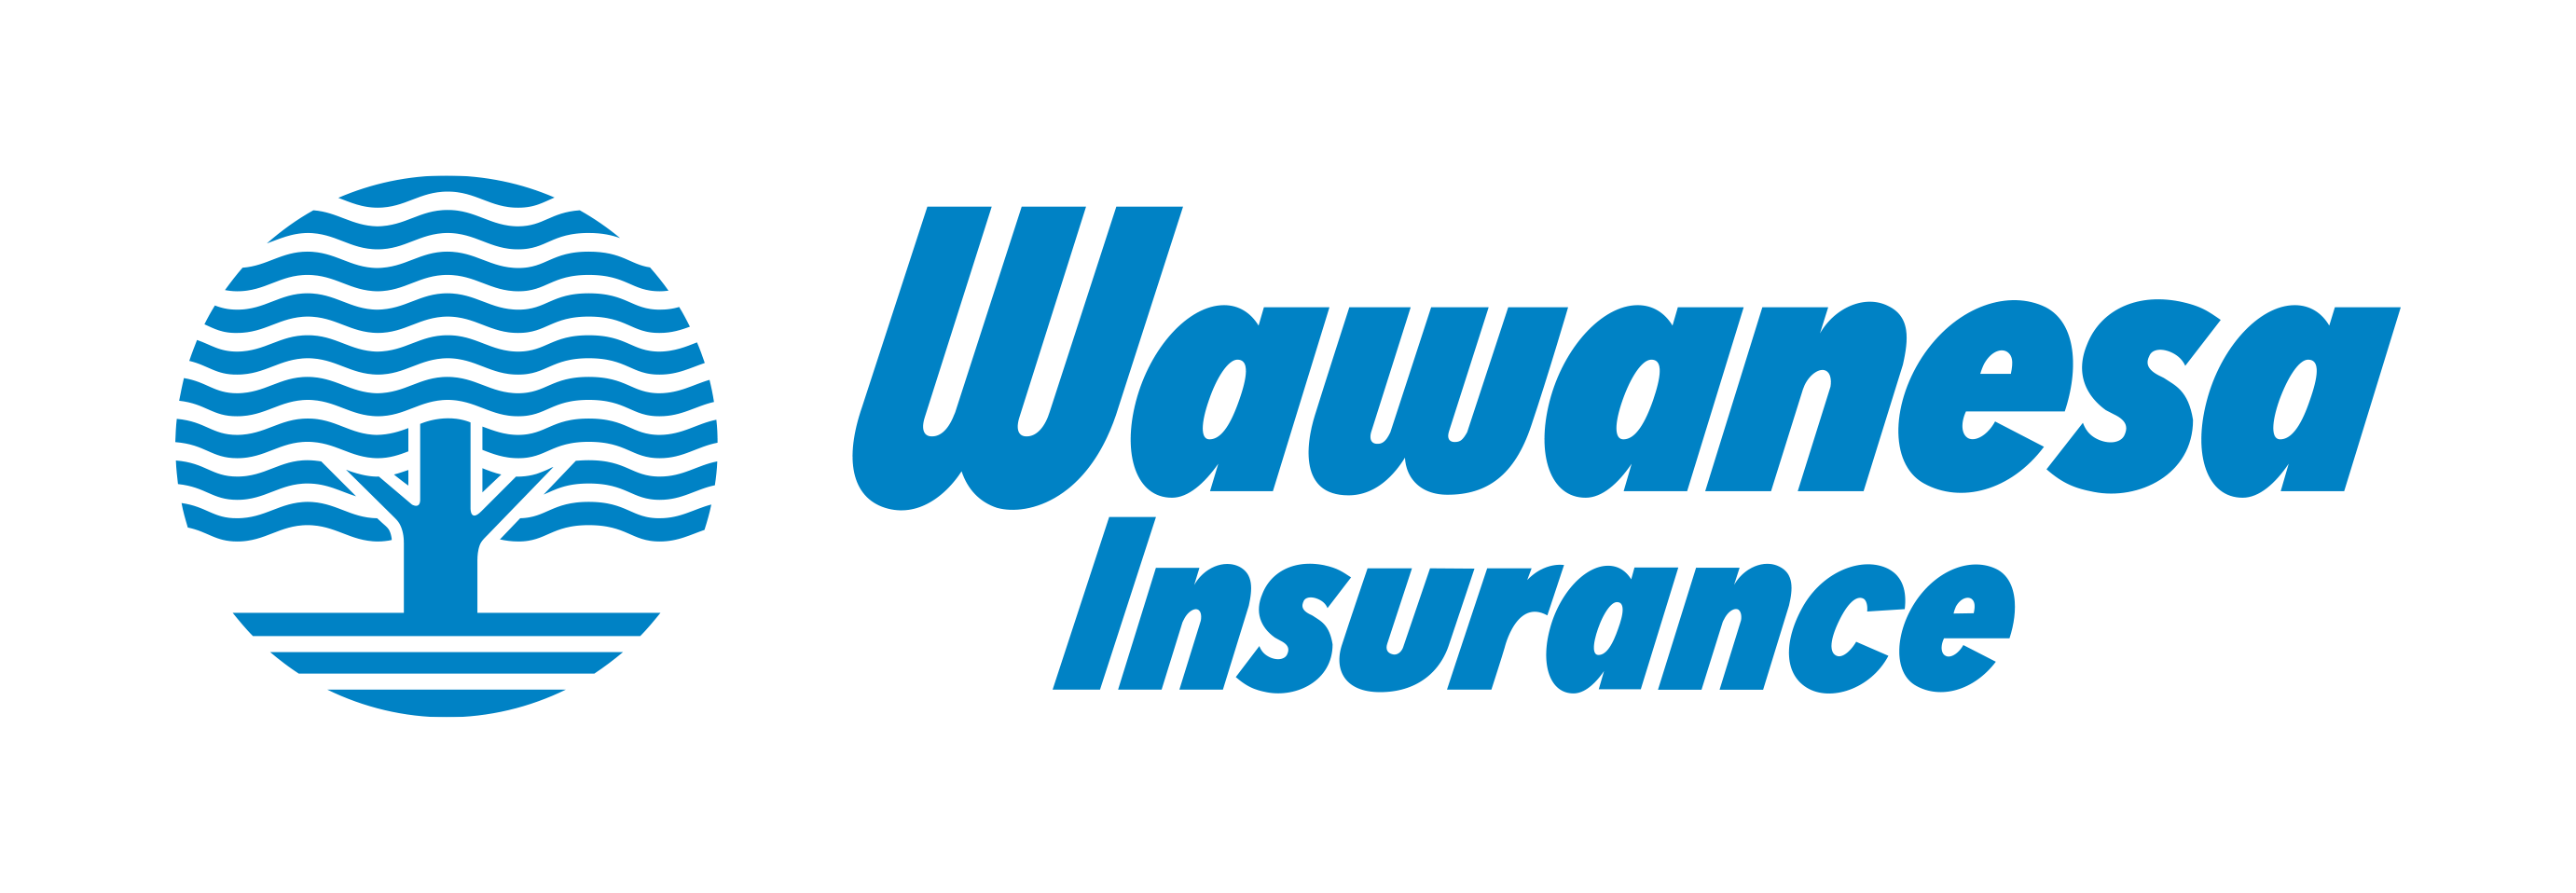 Tree Canada Sponsor: Wawanesa Insurance blue logo